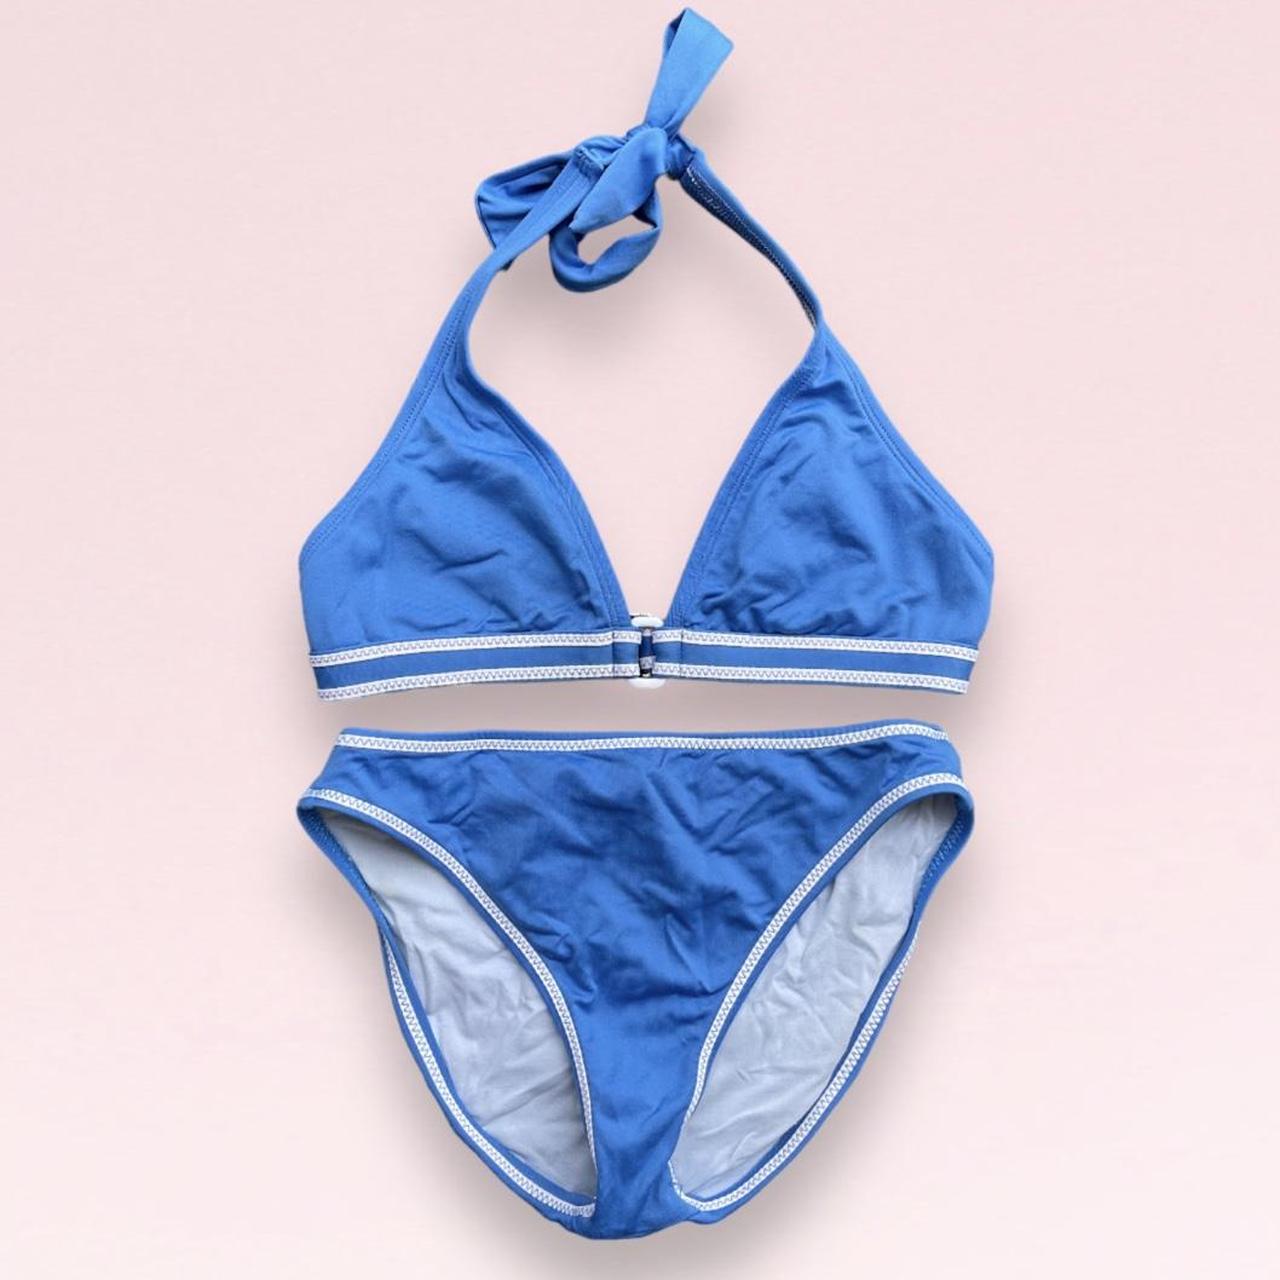 JAG Women's Blue and White Bikinis-and-tankini-sets